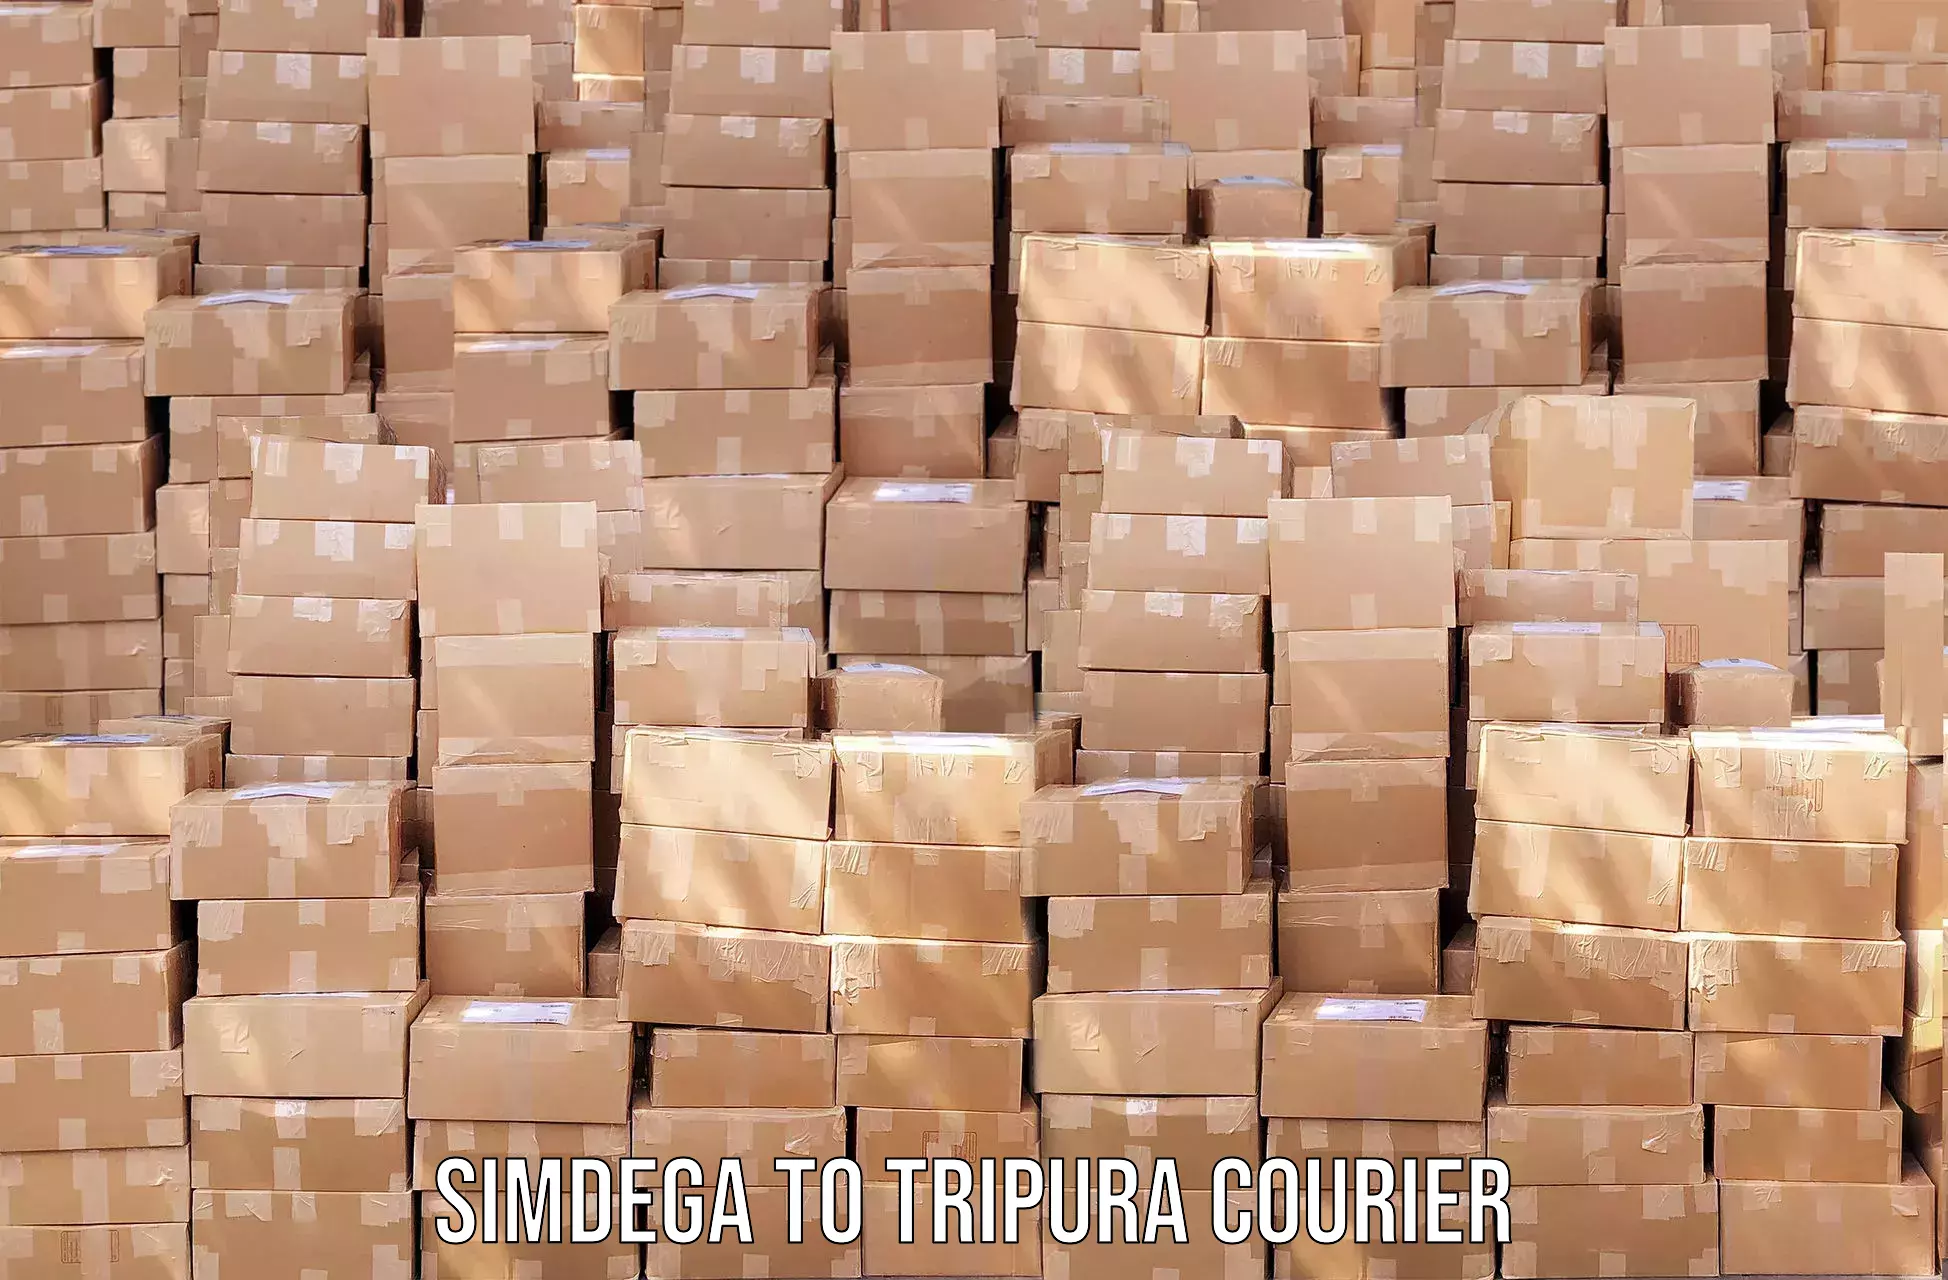 Courier service comparison Simdega to Udaipur Tripura